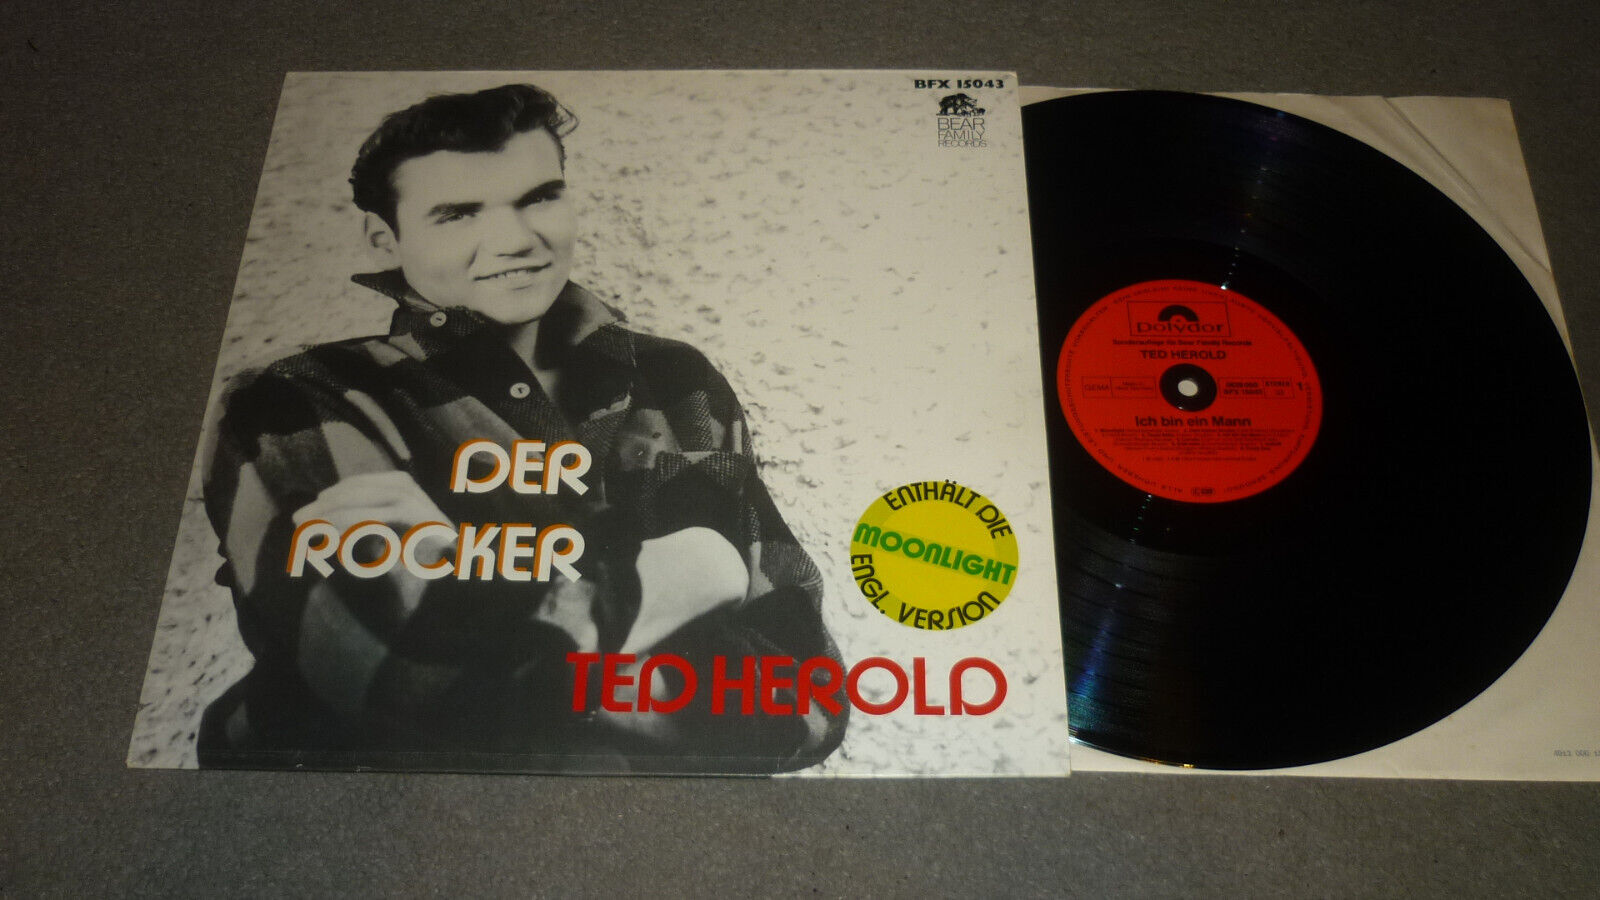 Ted Herold - I Am One Mann (The Rocker) - Bear Family Bfx 15043 D-1979 - VG+